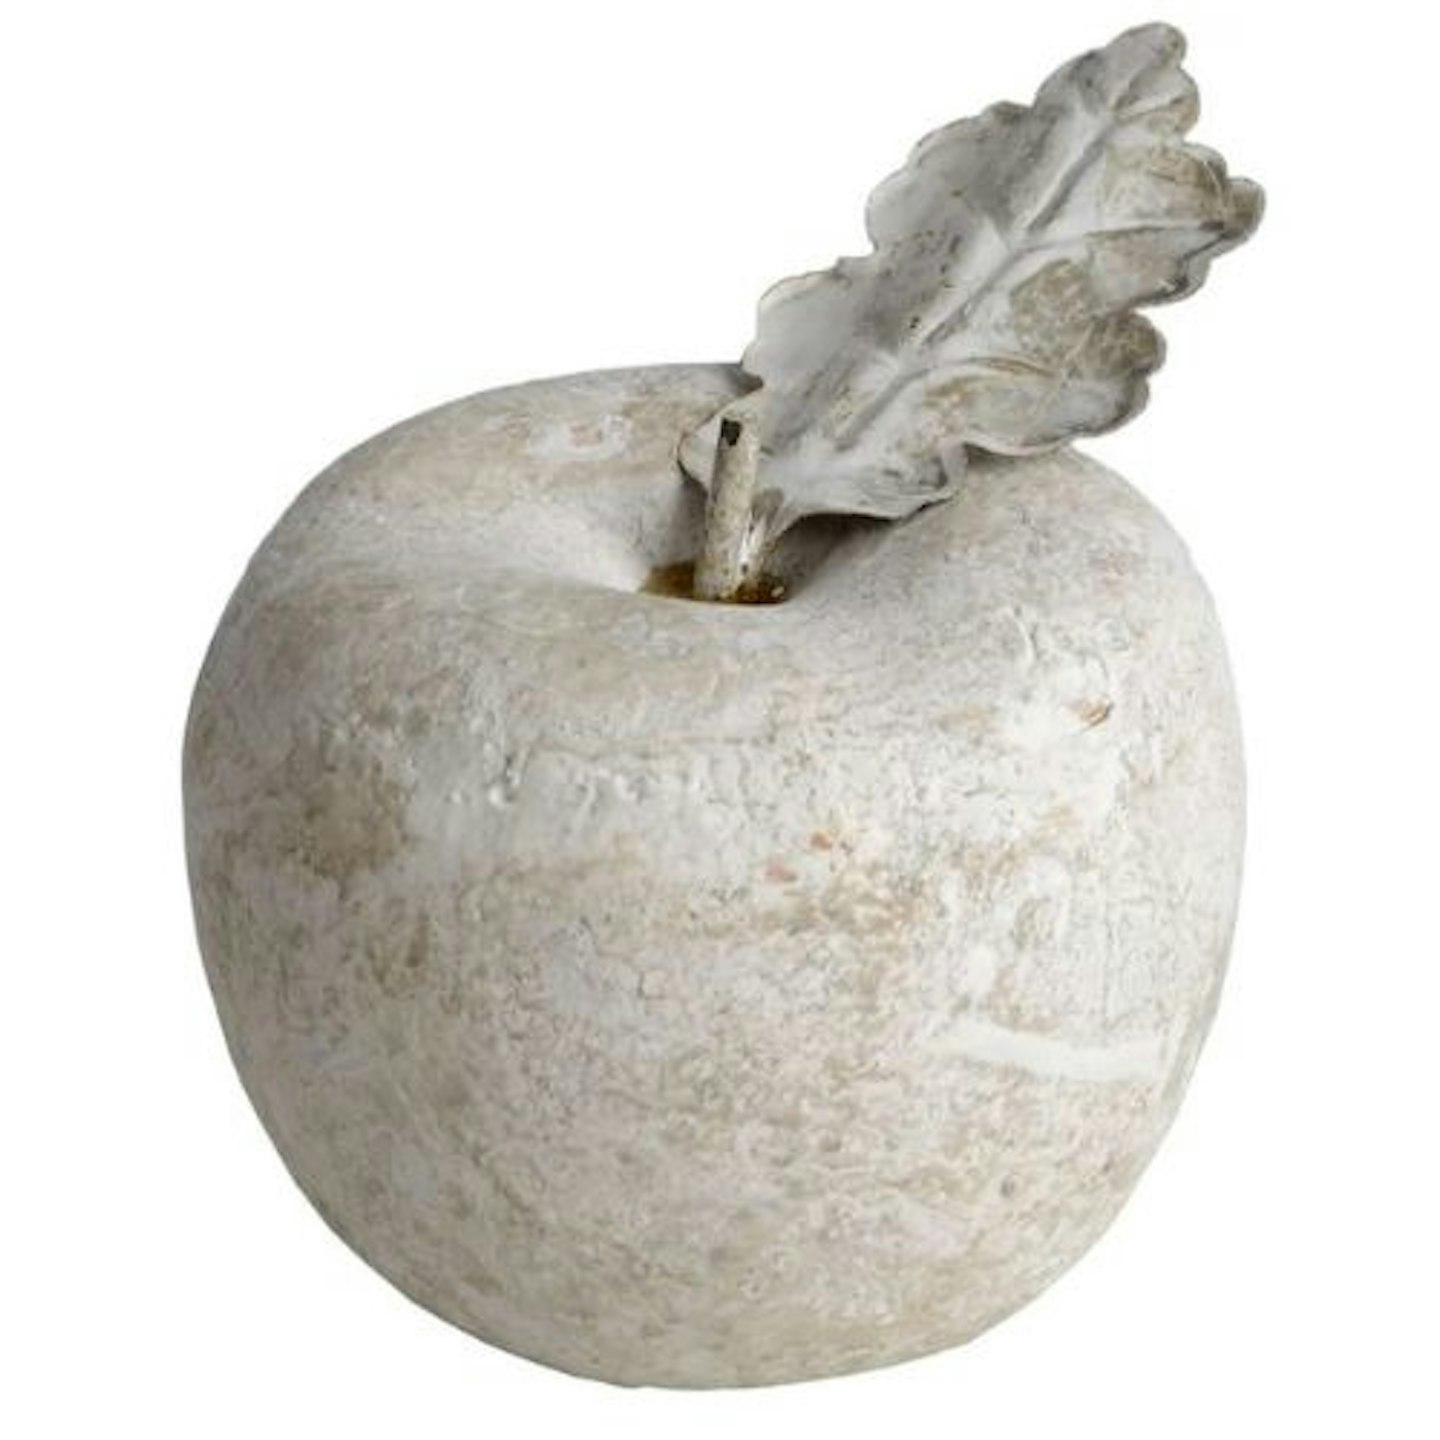 Pari Apple Garden Ornament